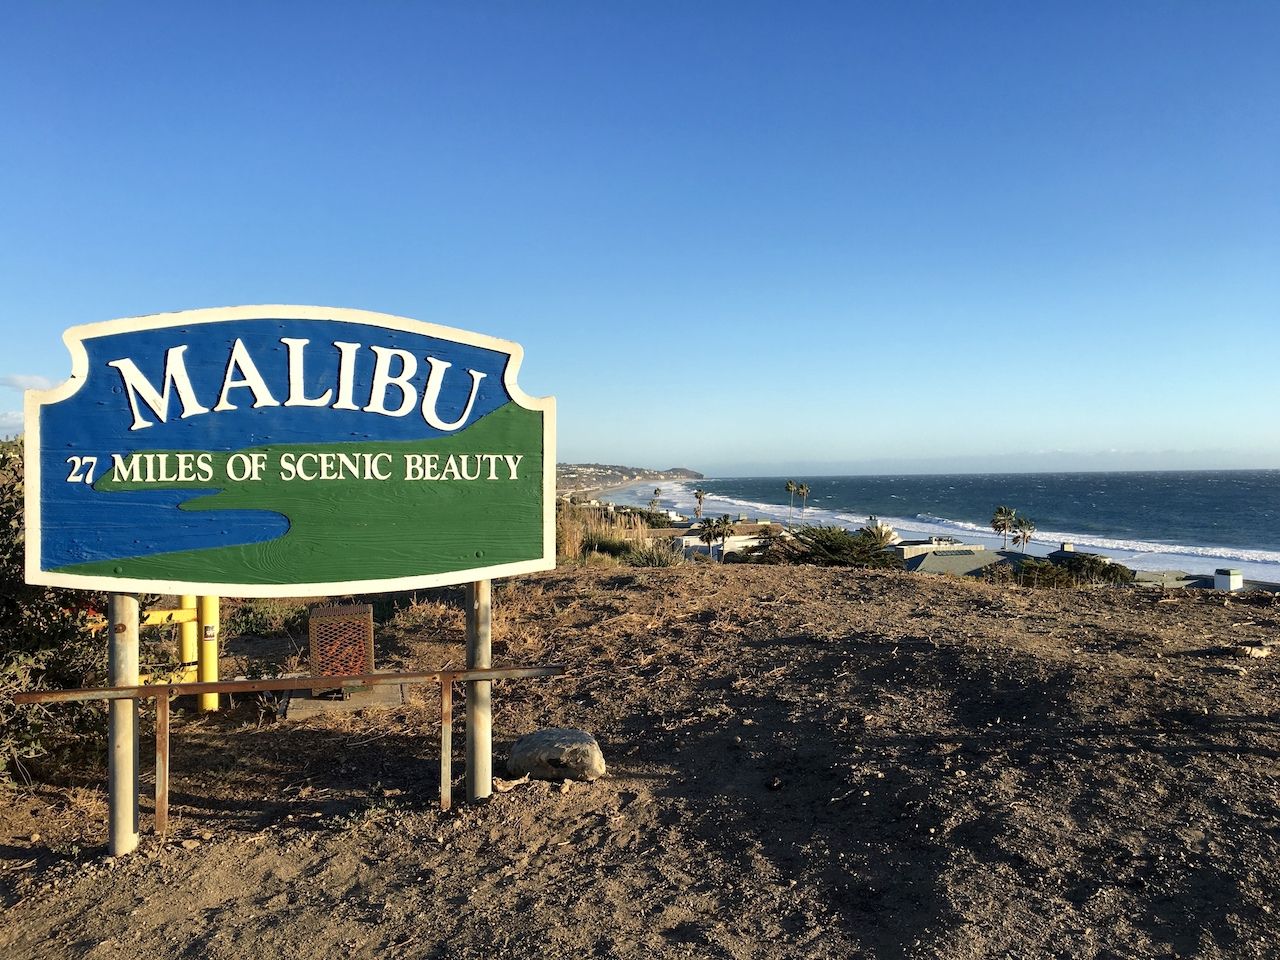 The view looking towards Malibu, California